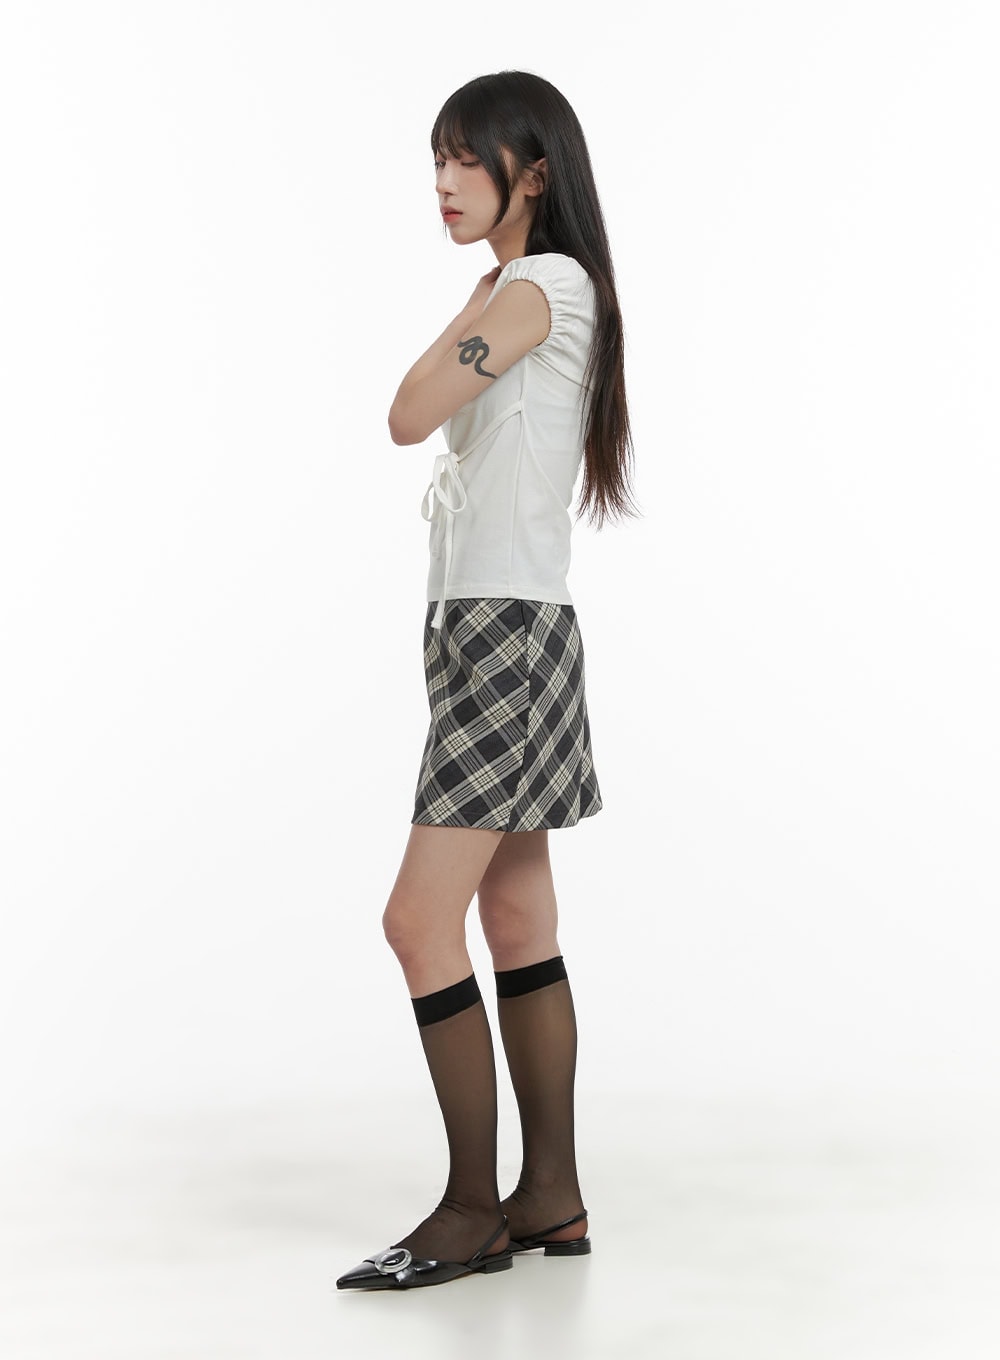 acubi-checkered-mini-skirt-ca430